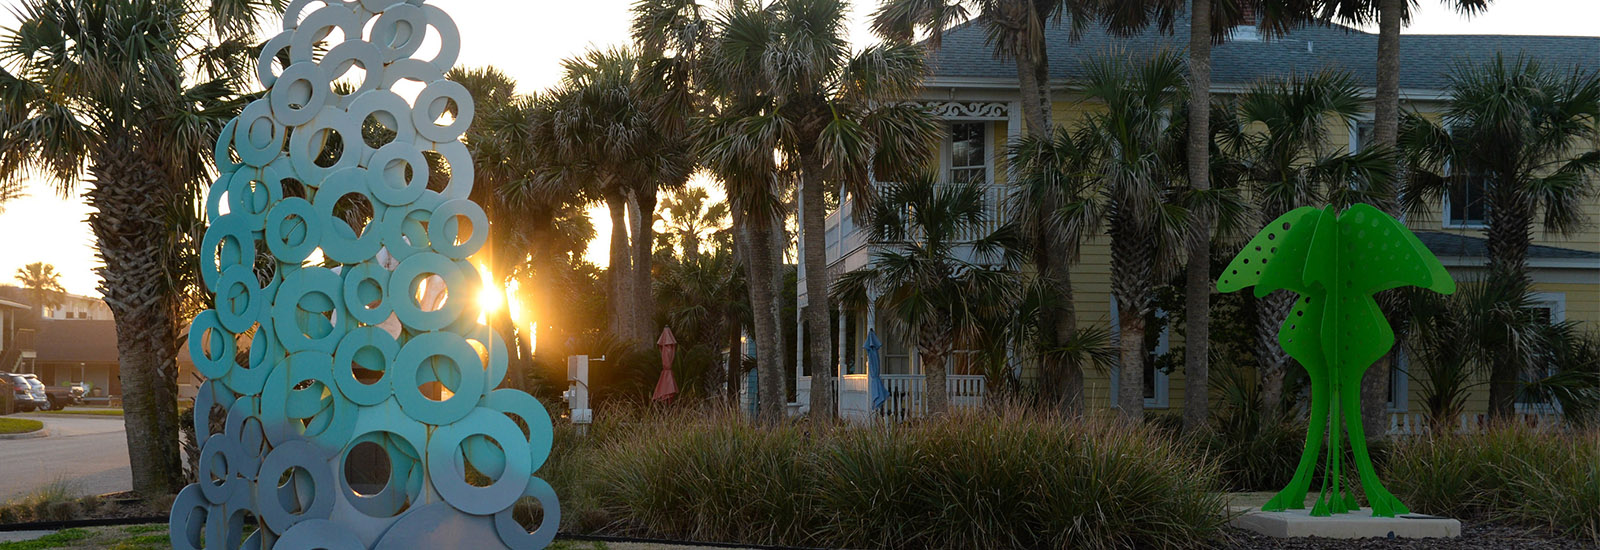 Sun shining through sculptures on display at the UNF Seaside Sculpture Park in Jacksonville Beach